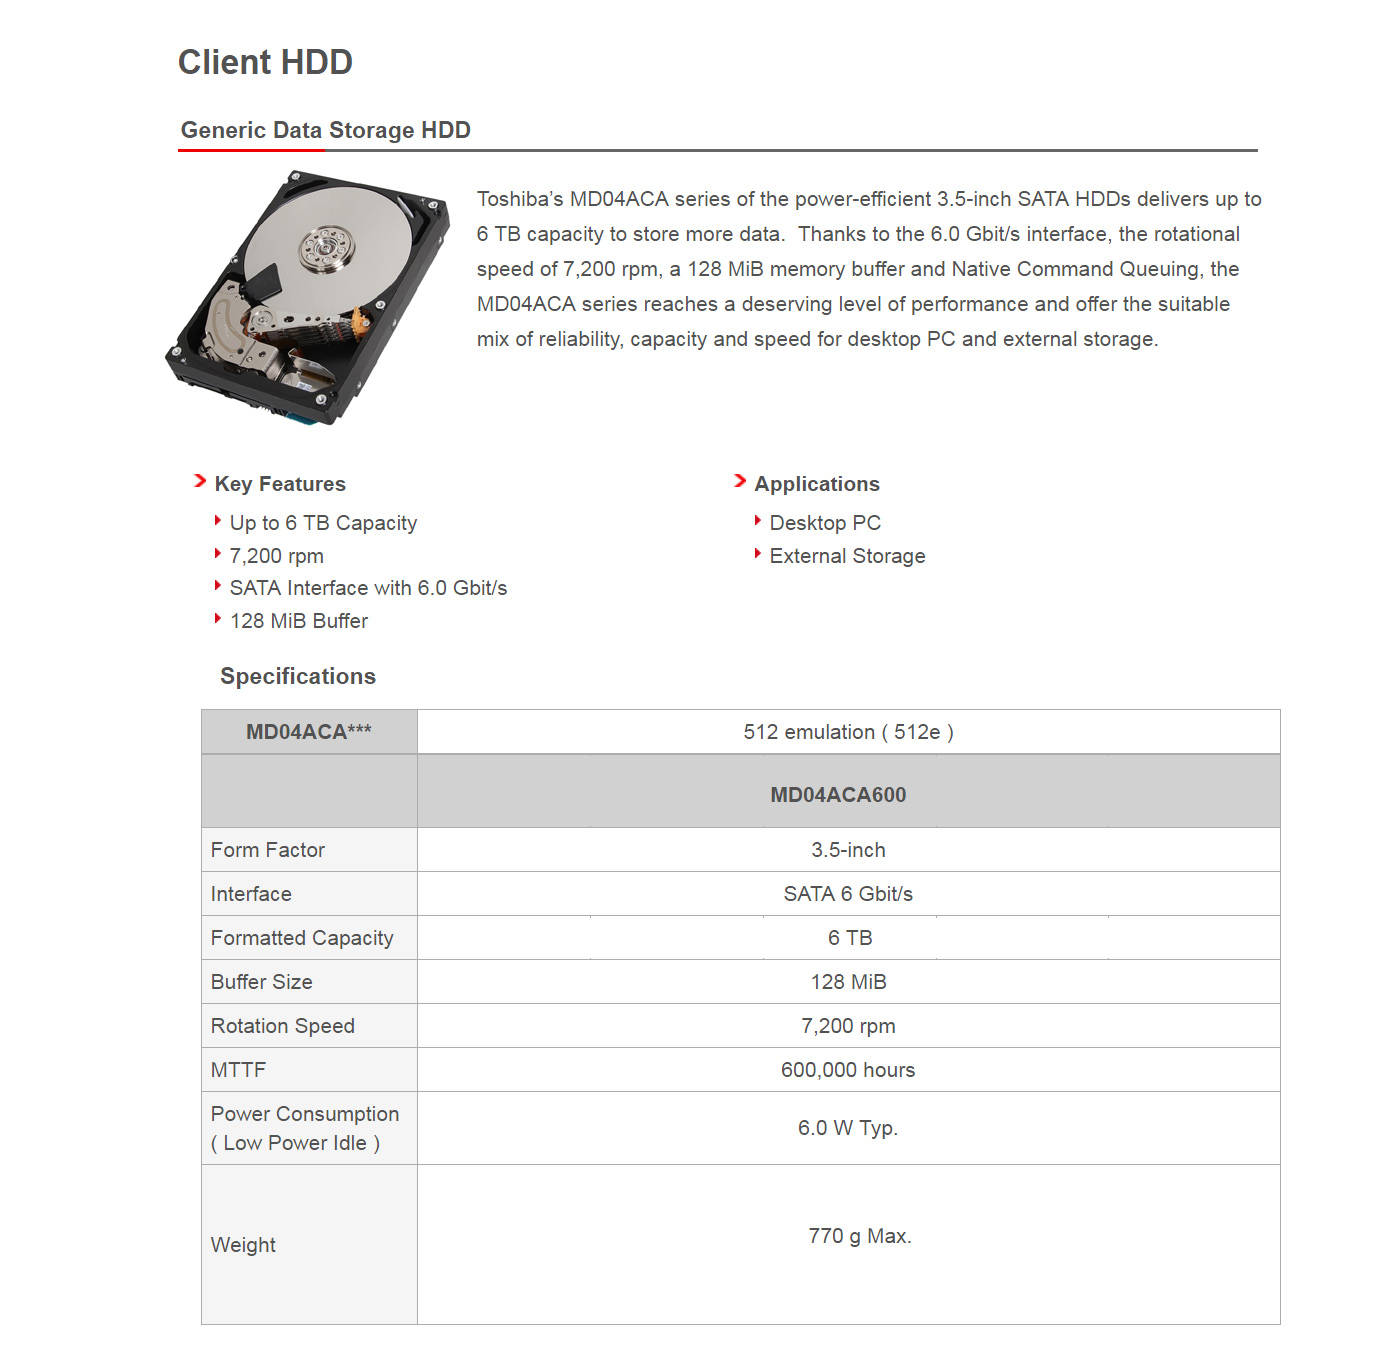  Buy Online Toshiba 6TB 3.5inch SATA Client HDD (MD04ACA600)